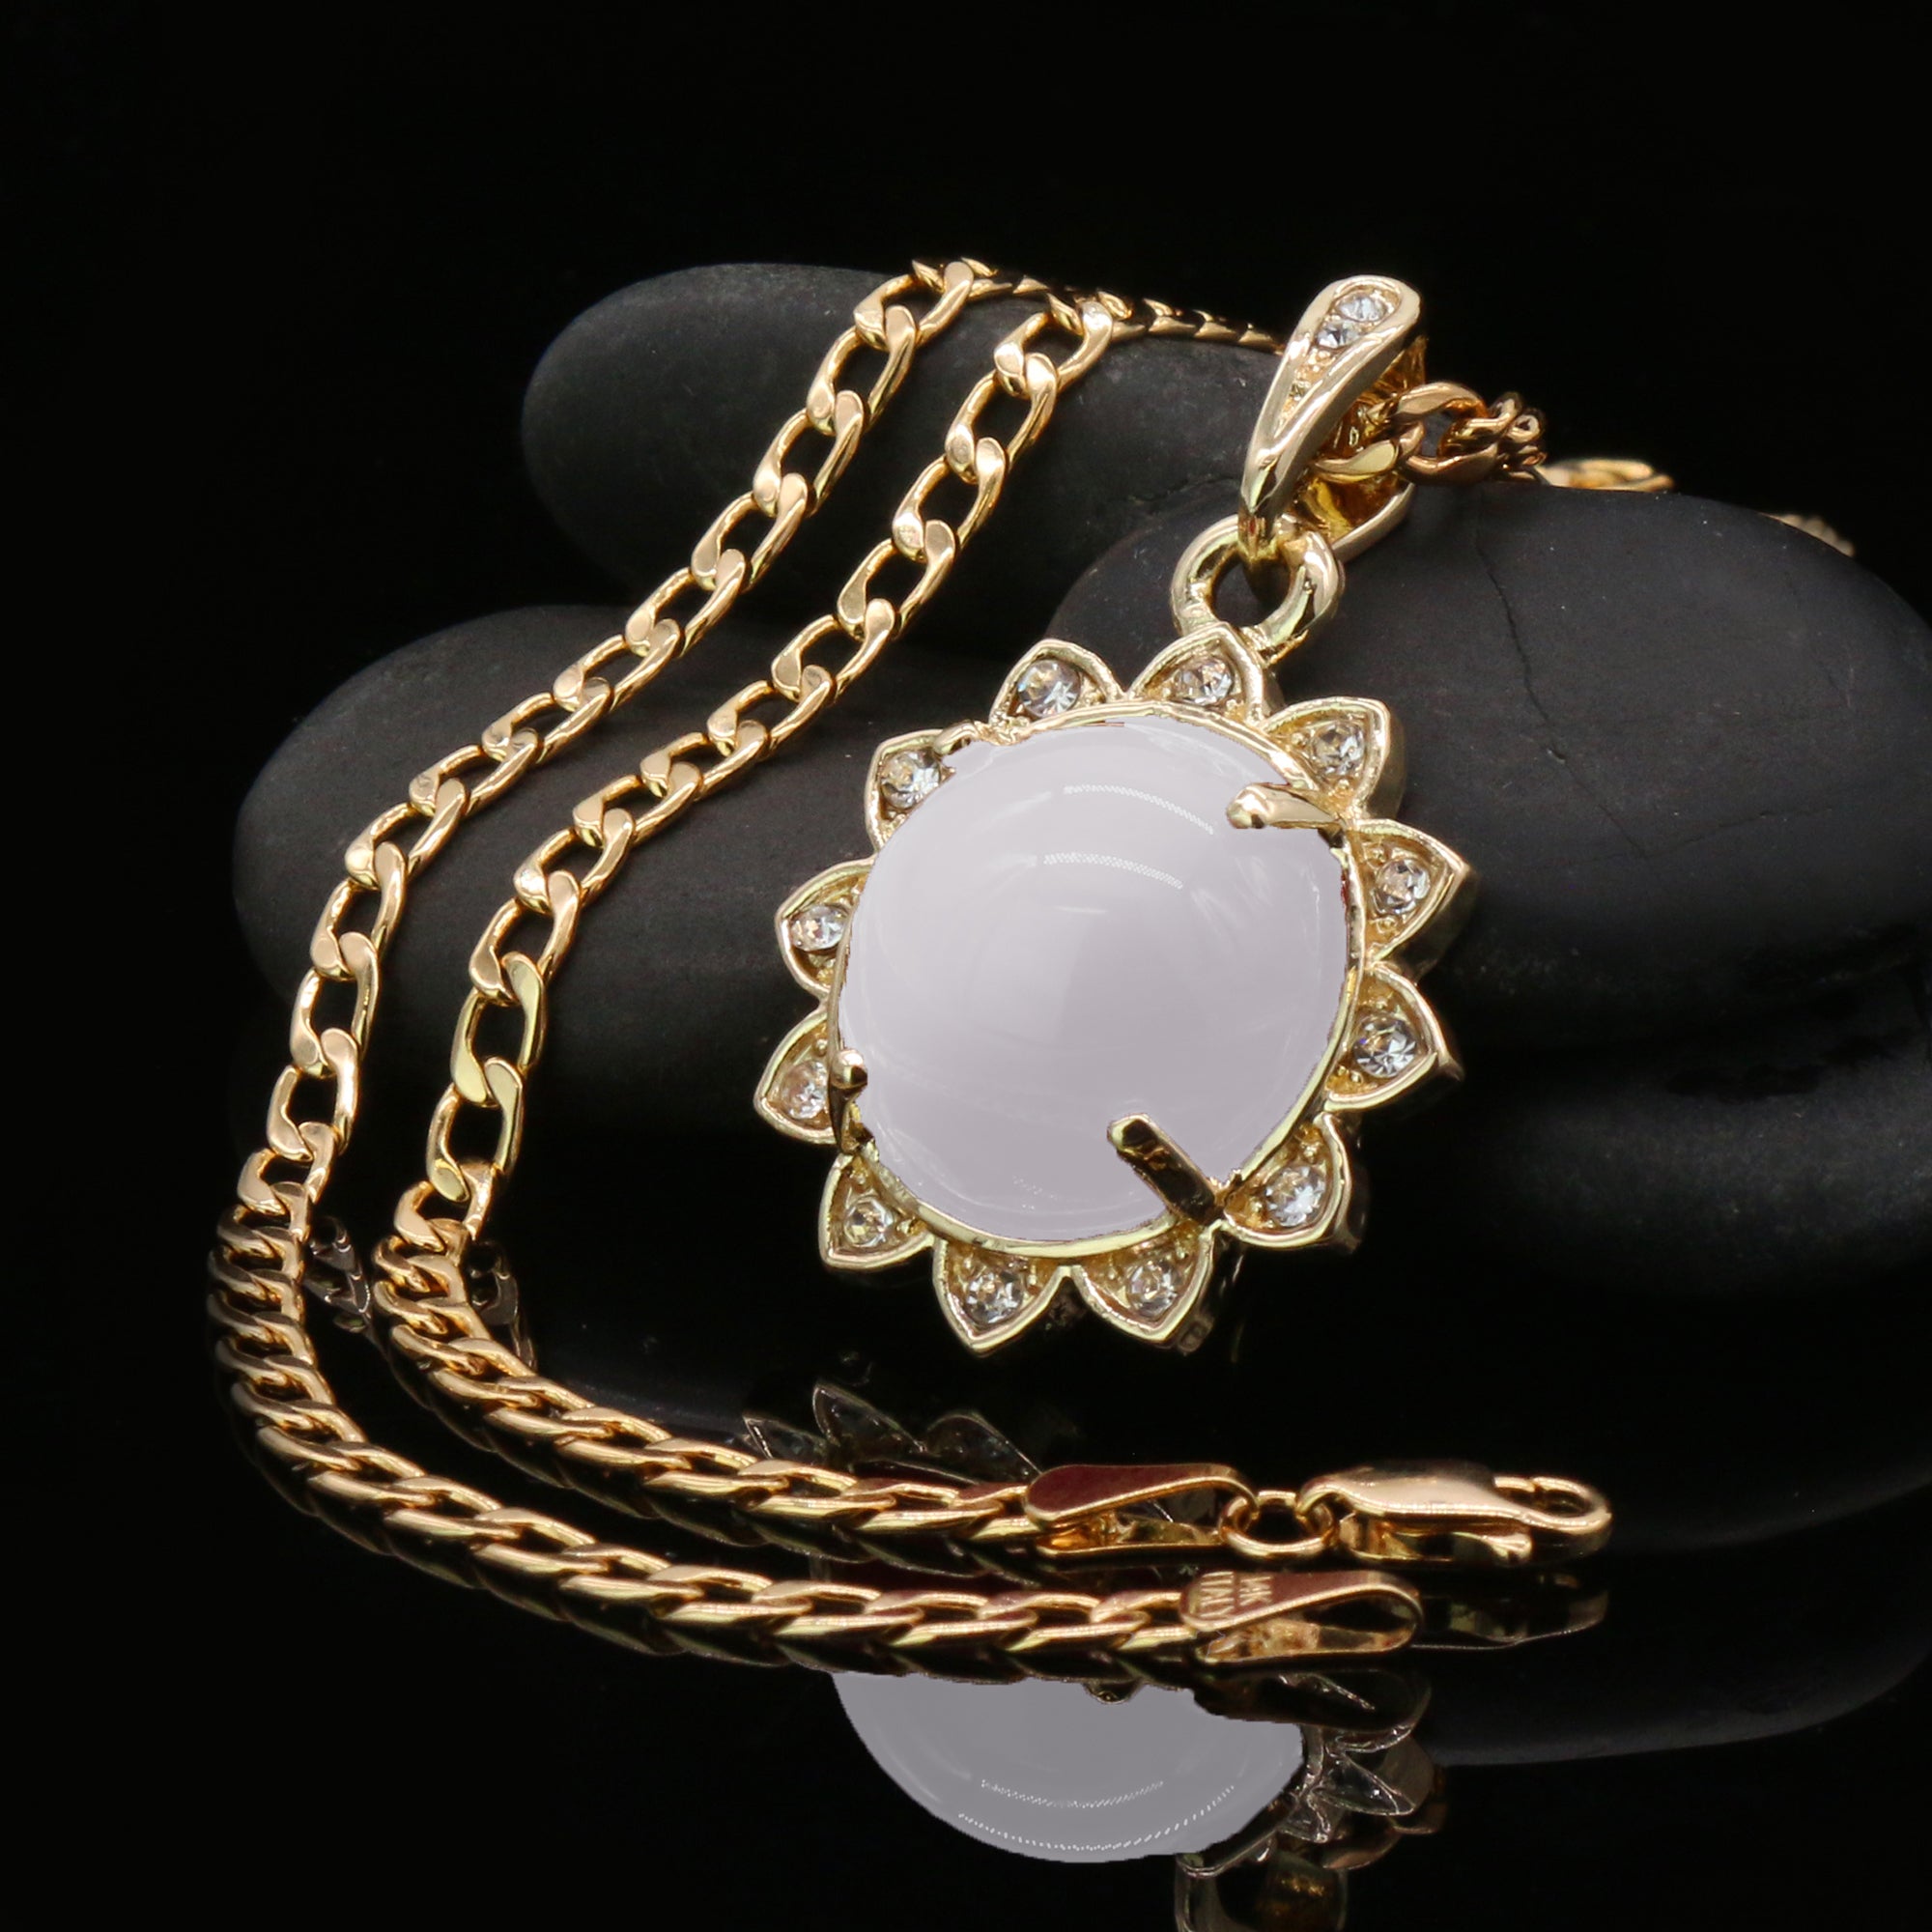 White Round Women's Jade Chain Pendant Necklace